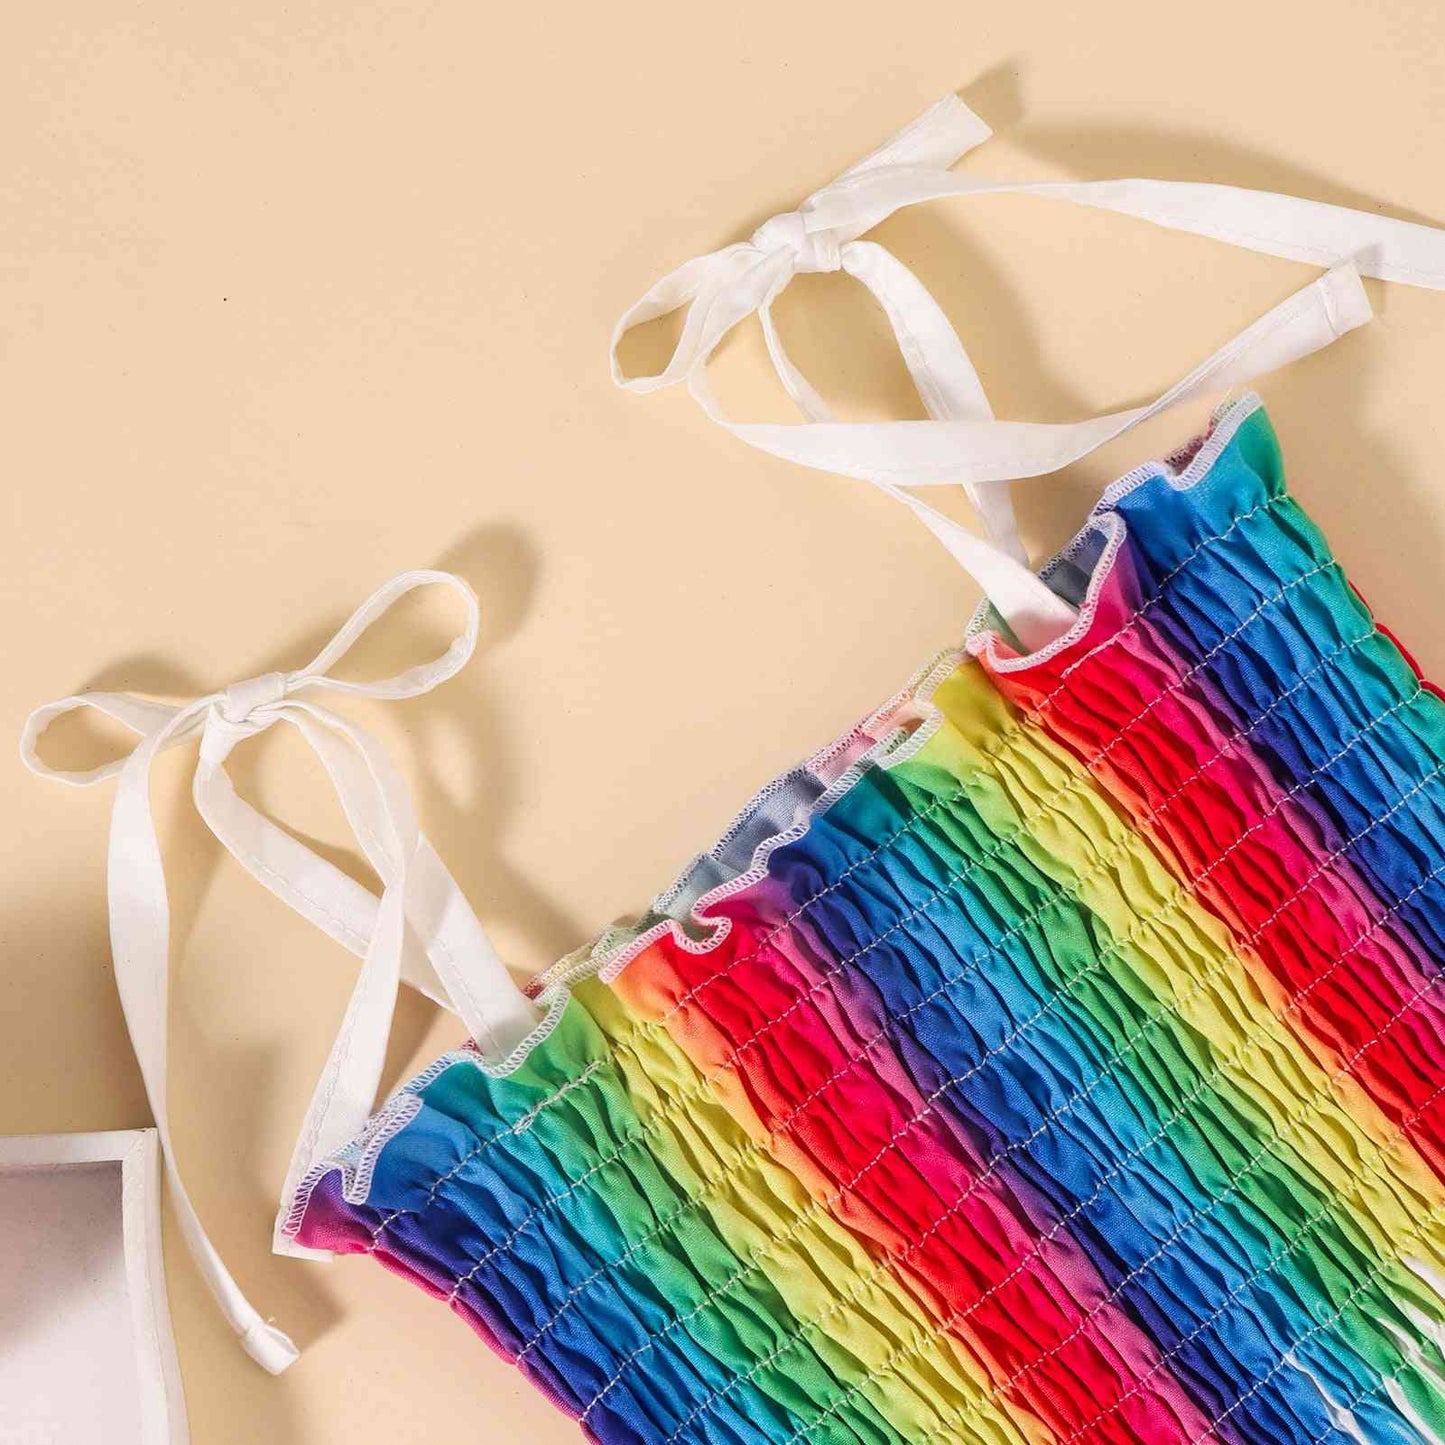 Rainbow Color Tie Shoulder Smocked Dress | Sugarz Chique Boutique